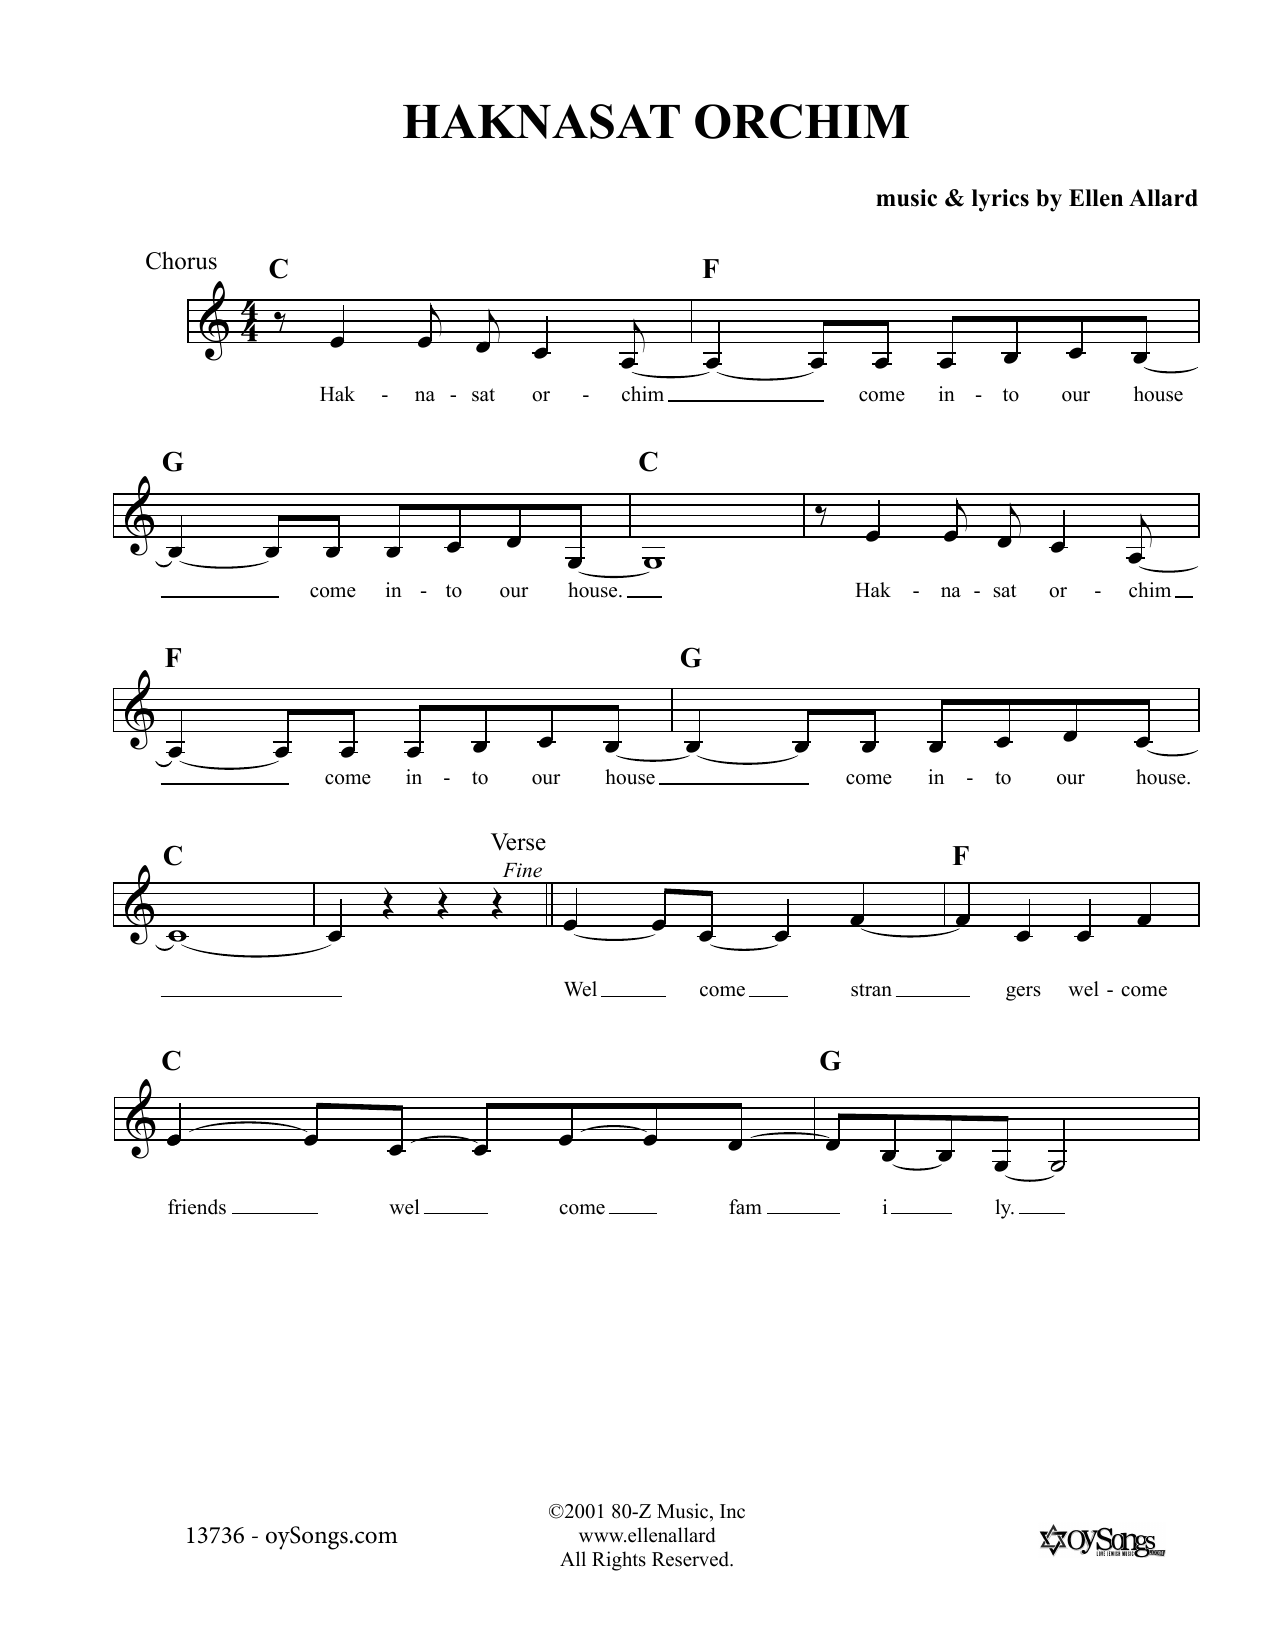 Download Ellen Allard Haknasat Orchim Sheet Music and learn how to play Melody Line, Lyrics & Chords PDF digital score in minutes